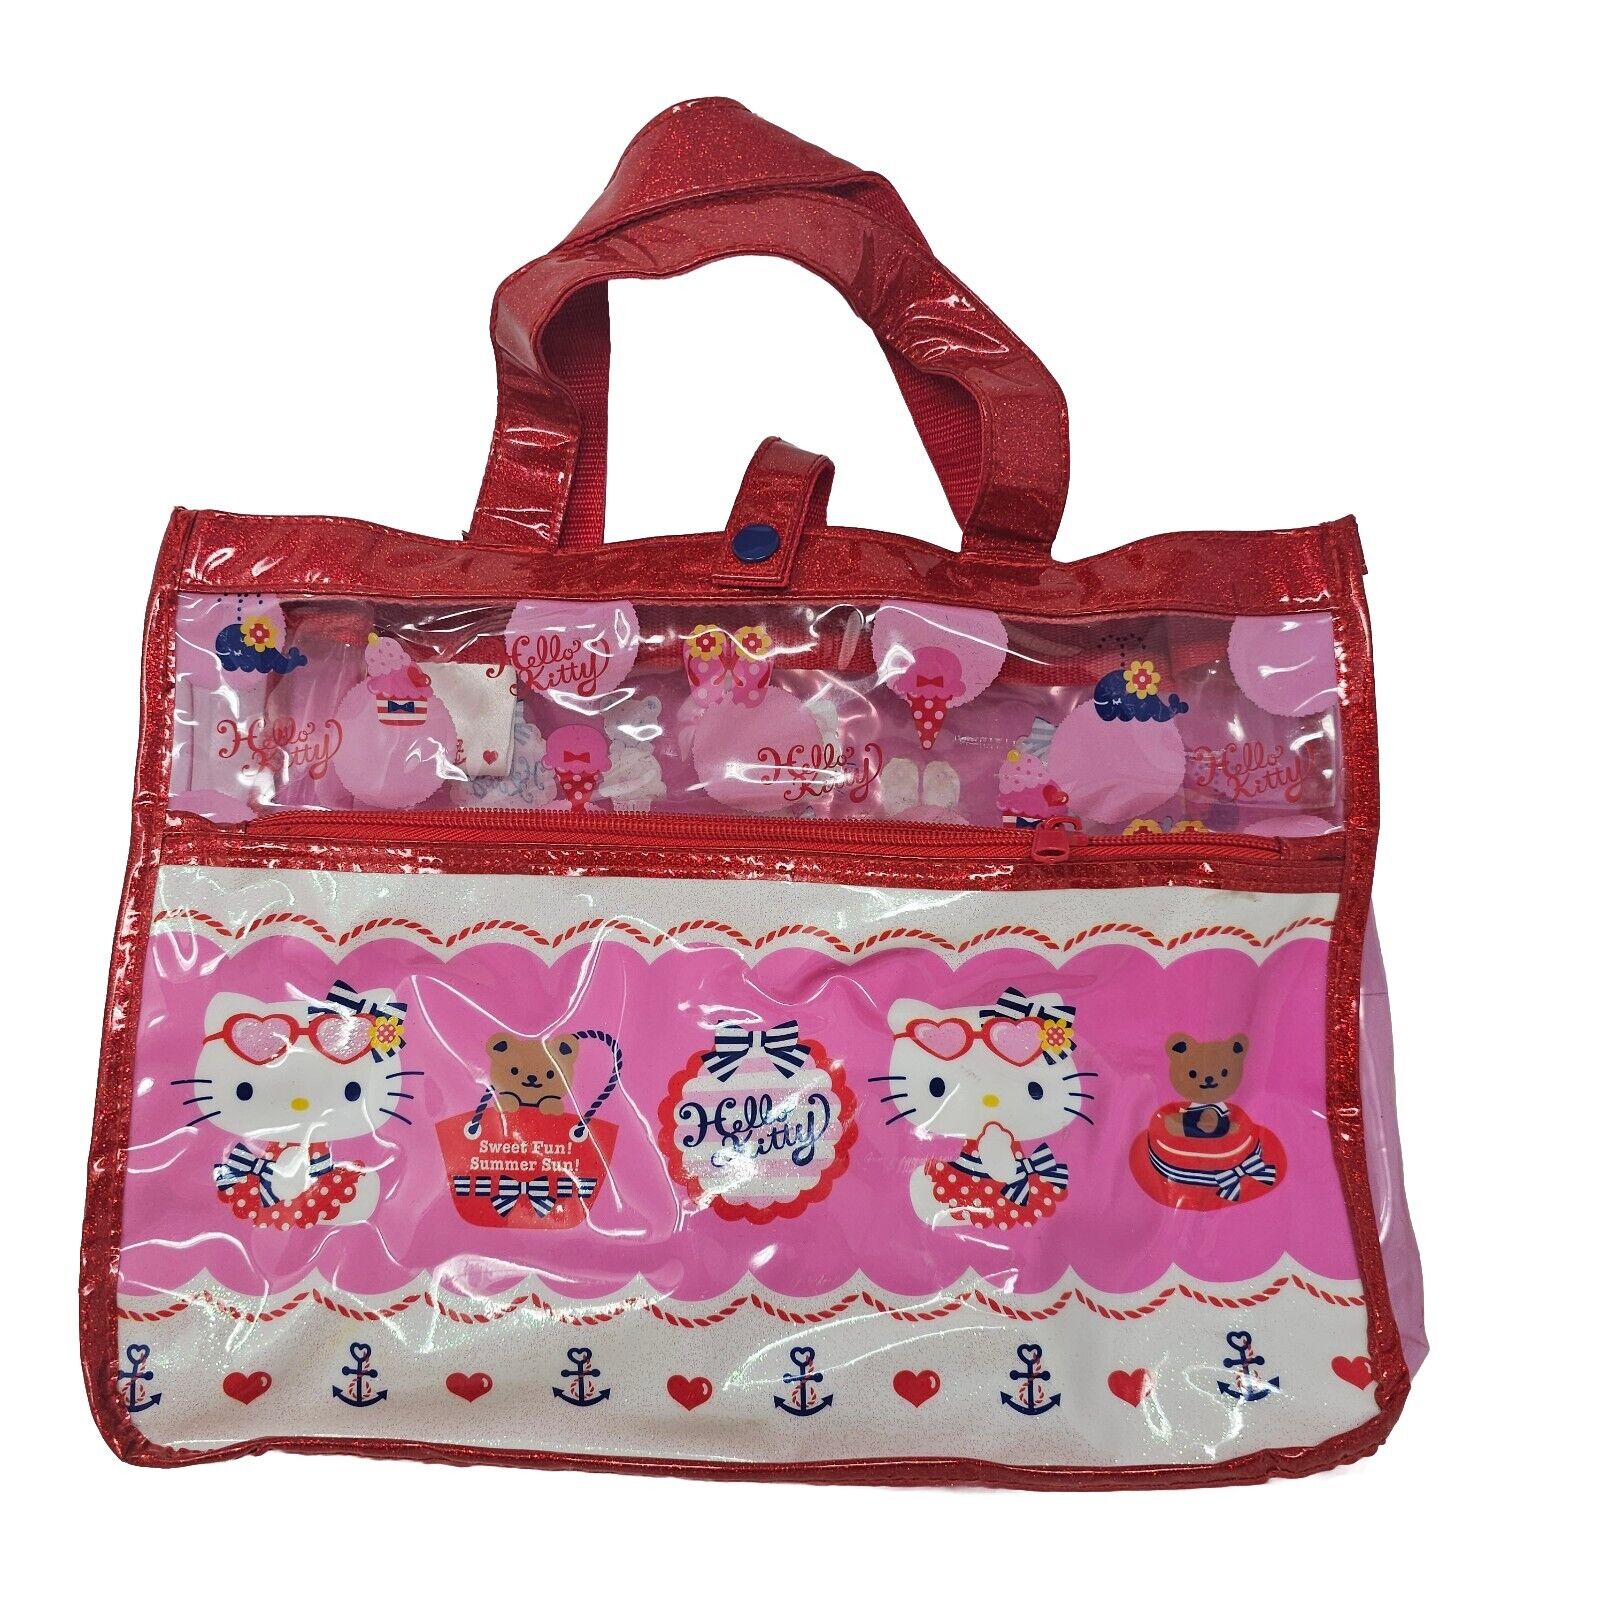 Hello Kitty 2012 Sanrio School Makeup Bag Only Amazing Condition